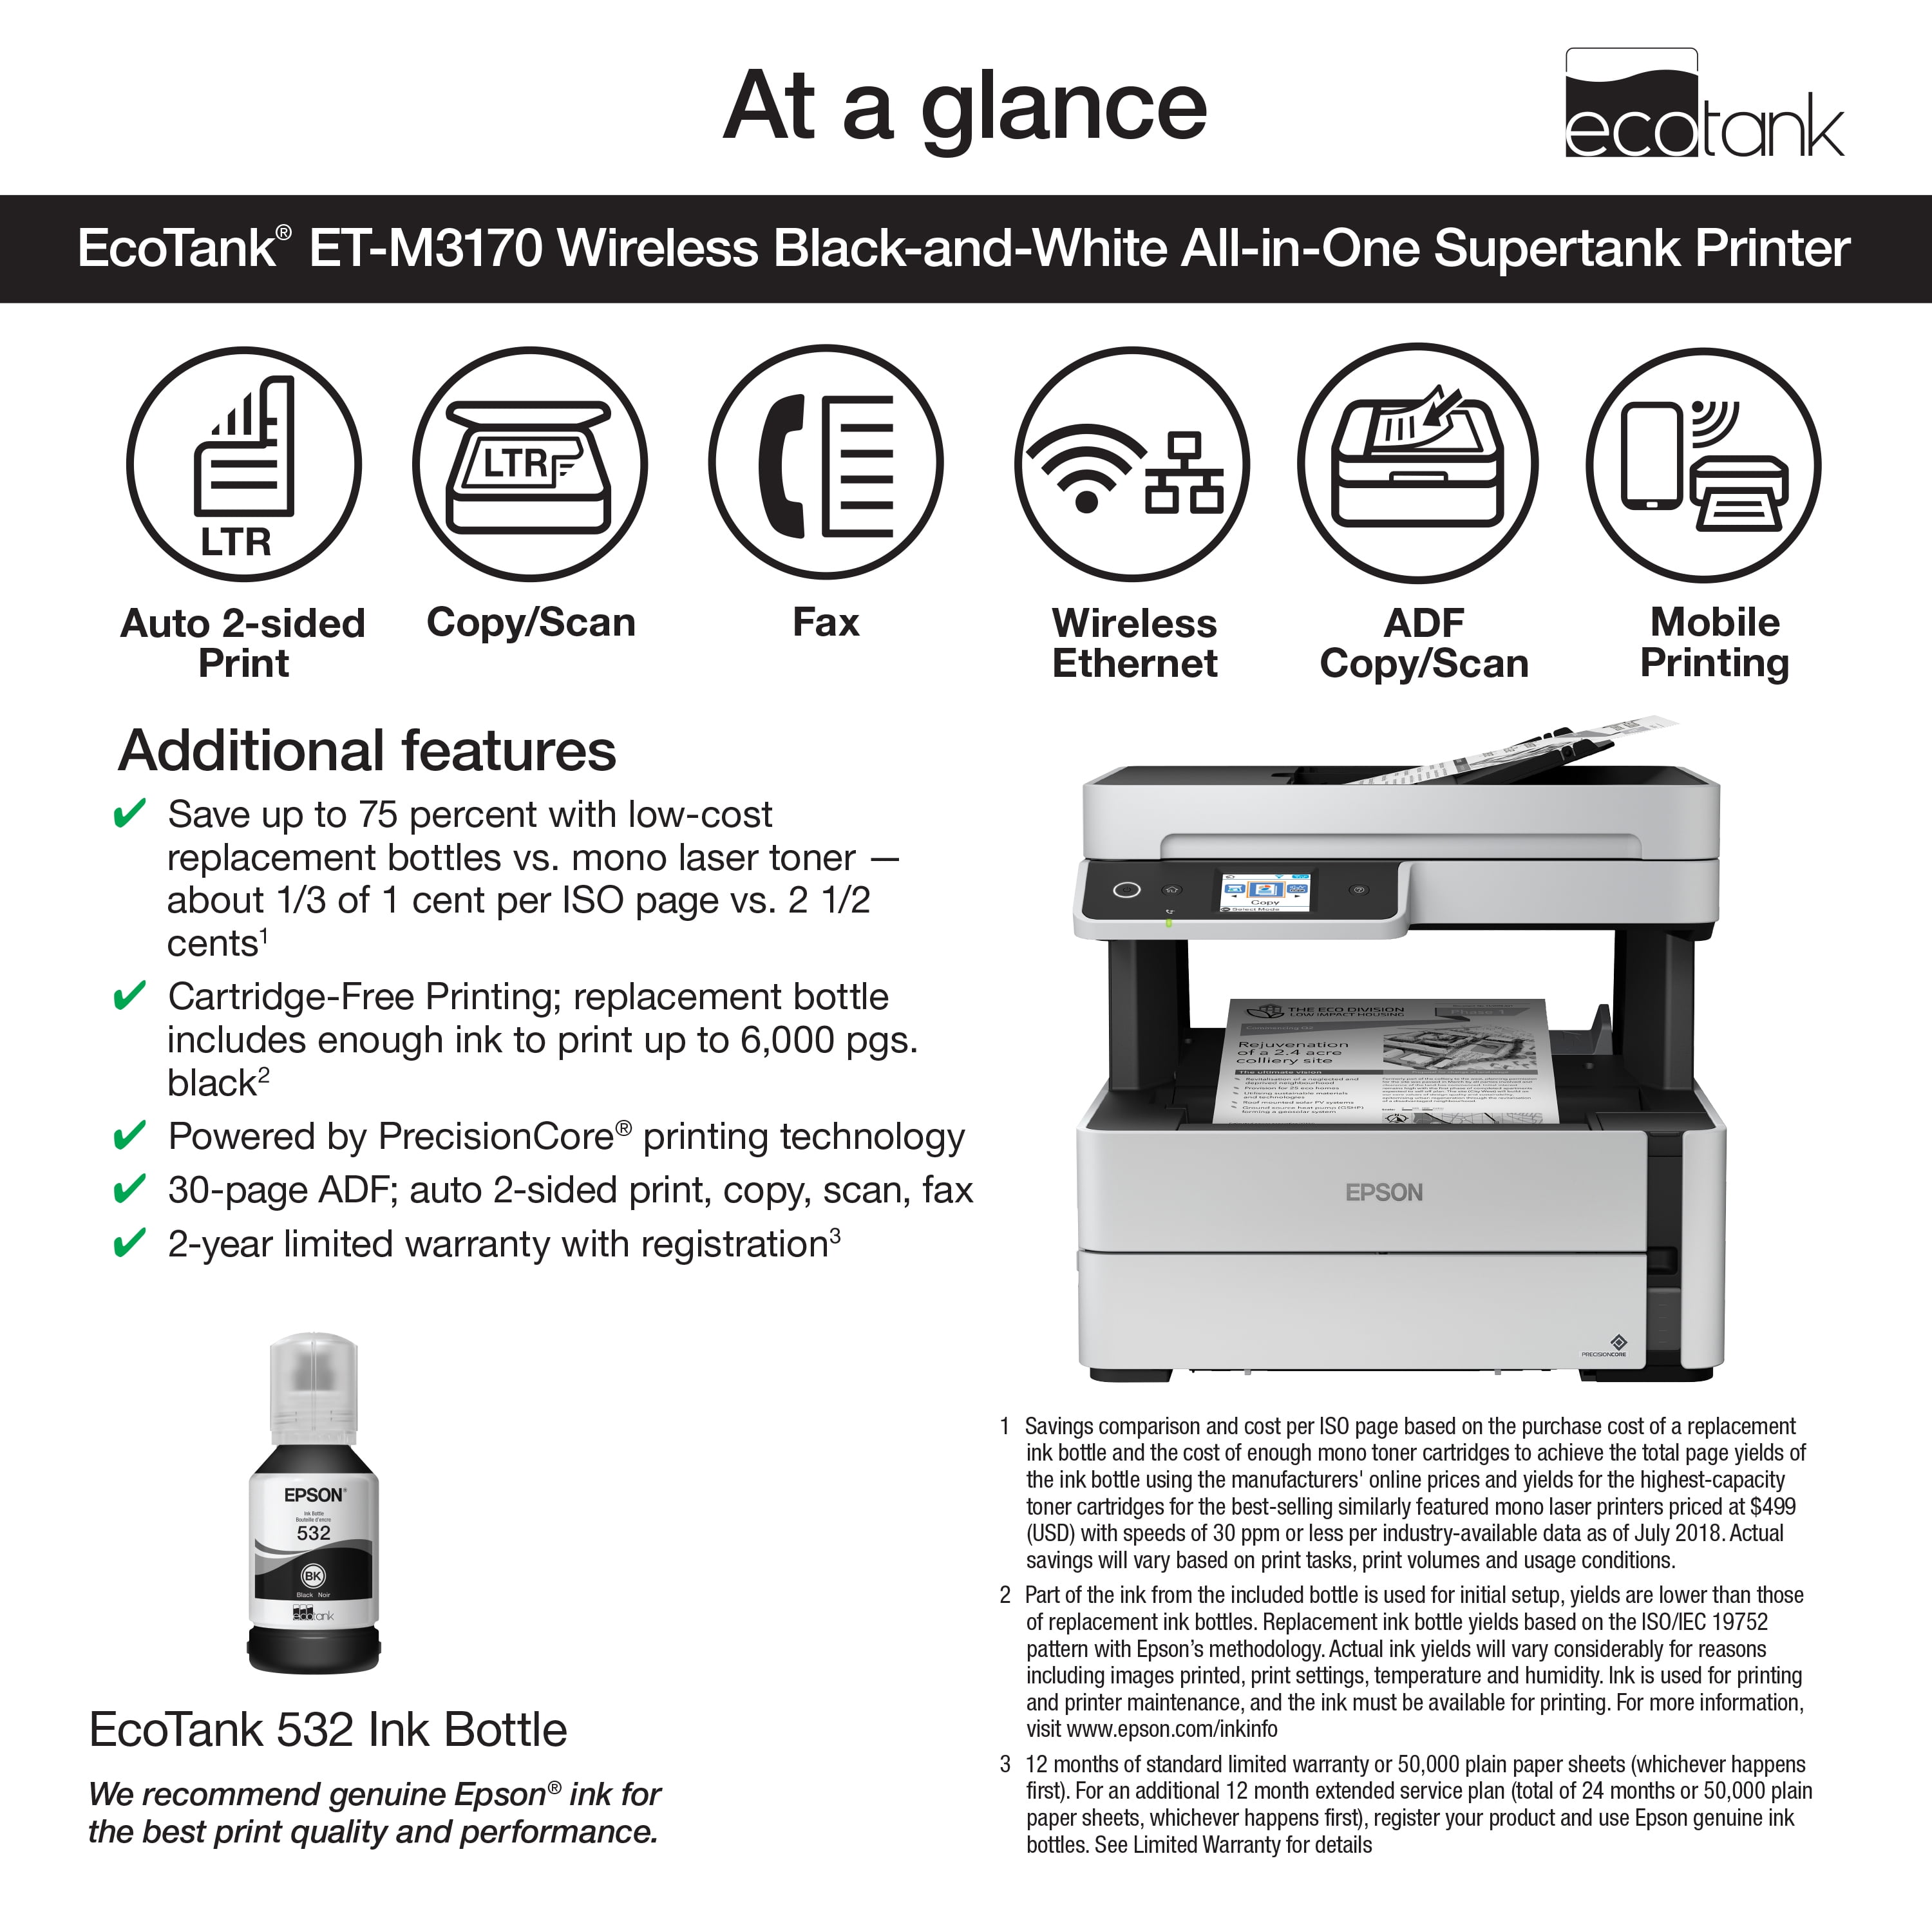 Impresora multifuncional Epson Ecotank M3170 Monocromatica Duplex Adf Wifi